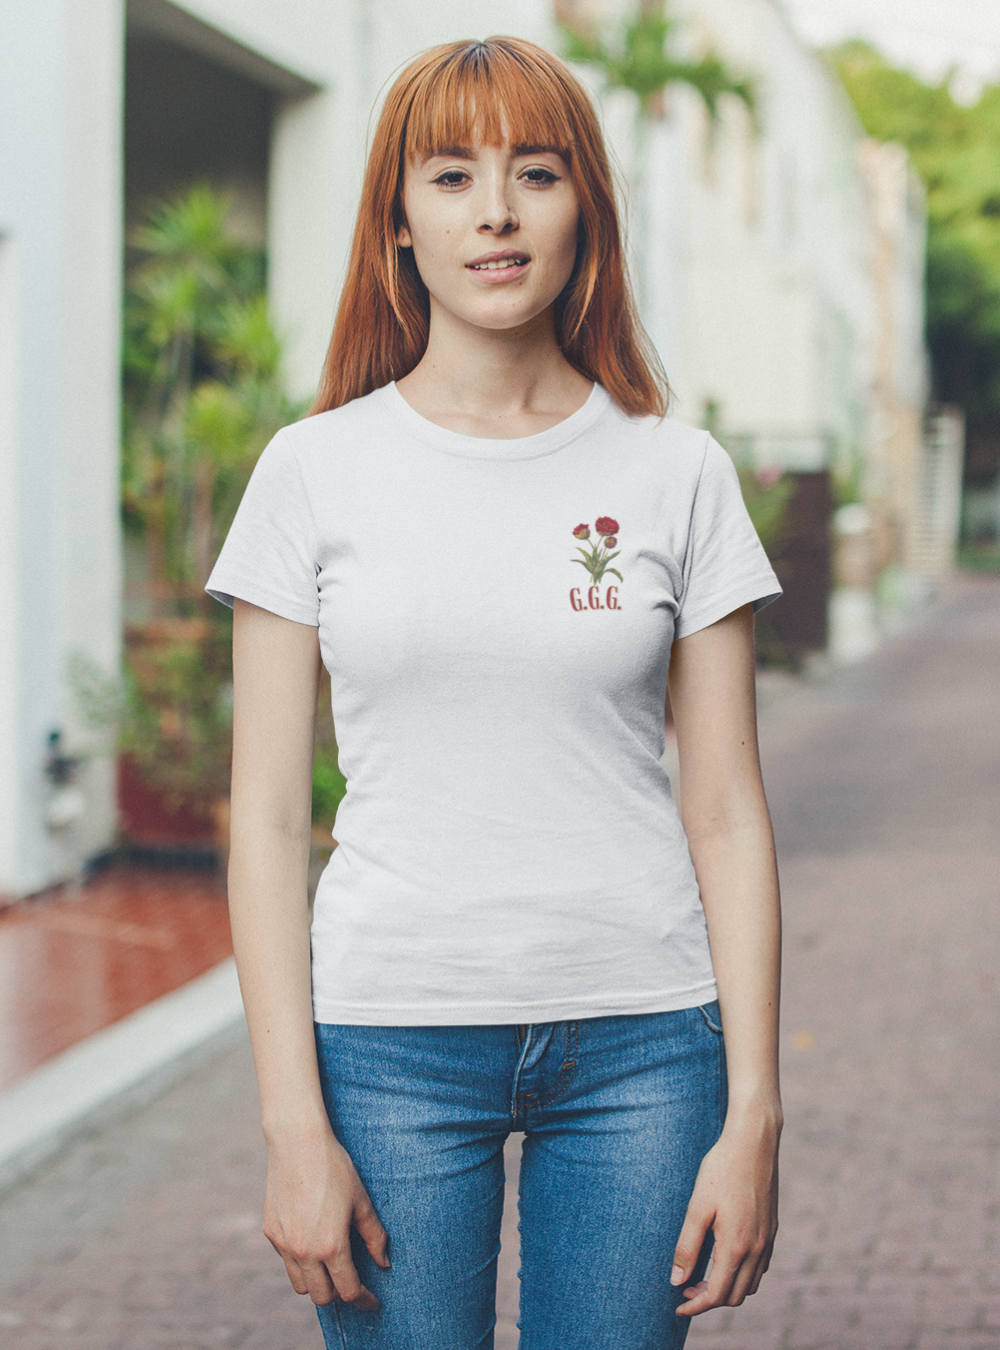 Girls Got Goals (backprint) | Premium Organic Ladies T-Shirt